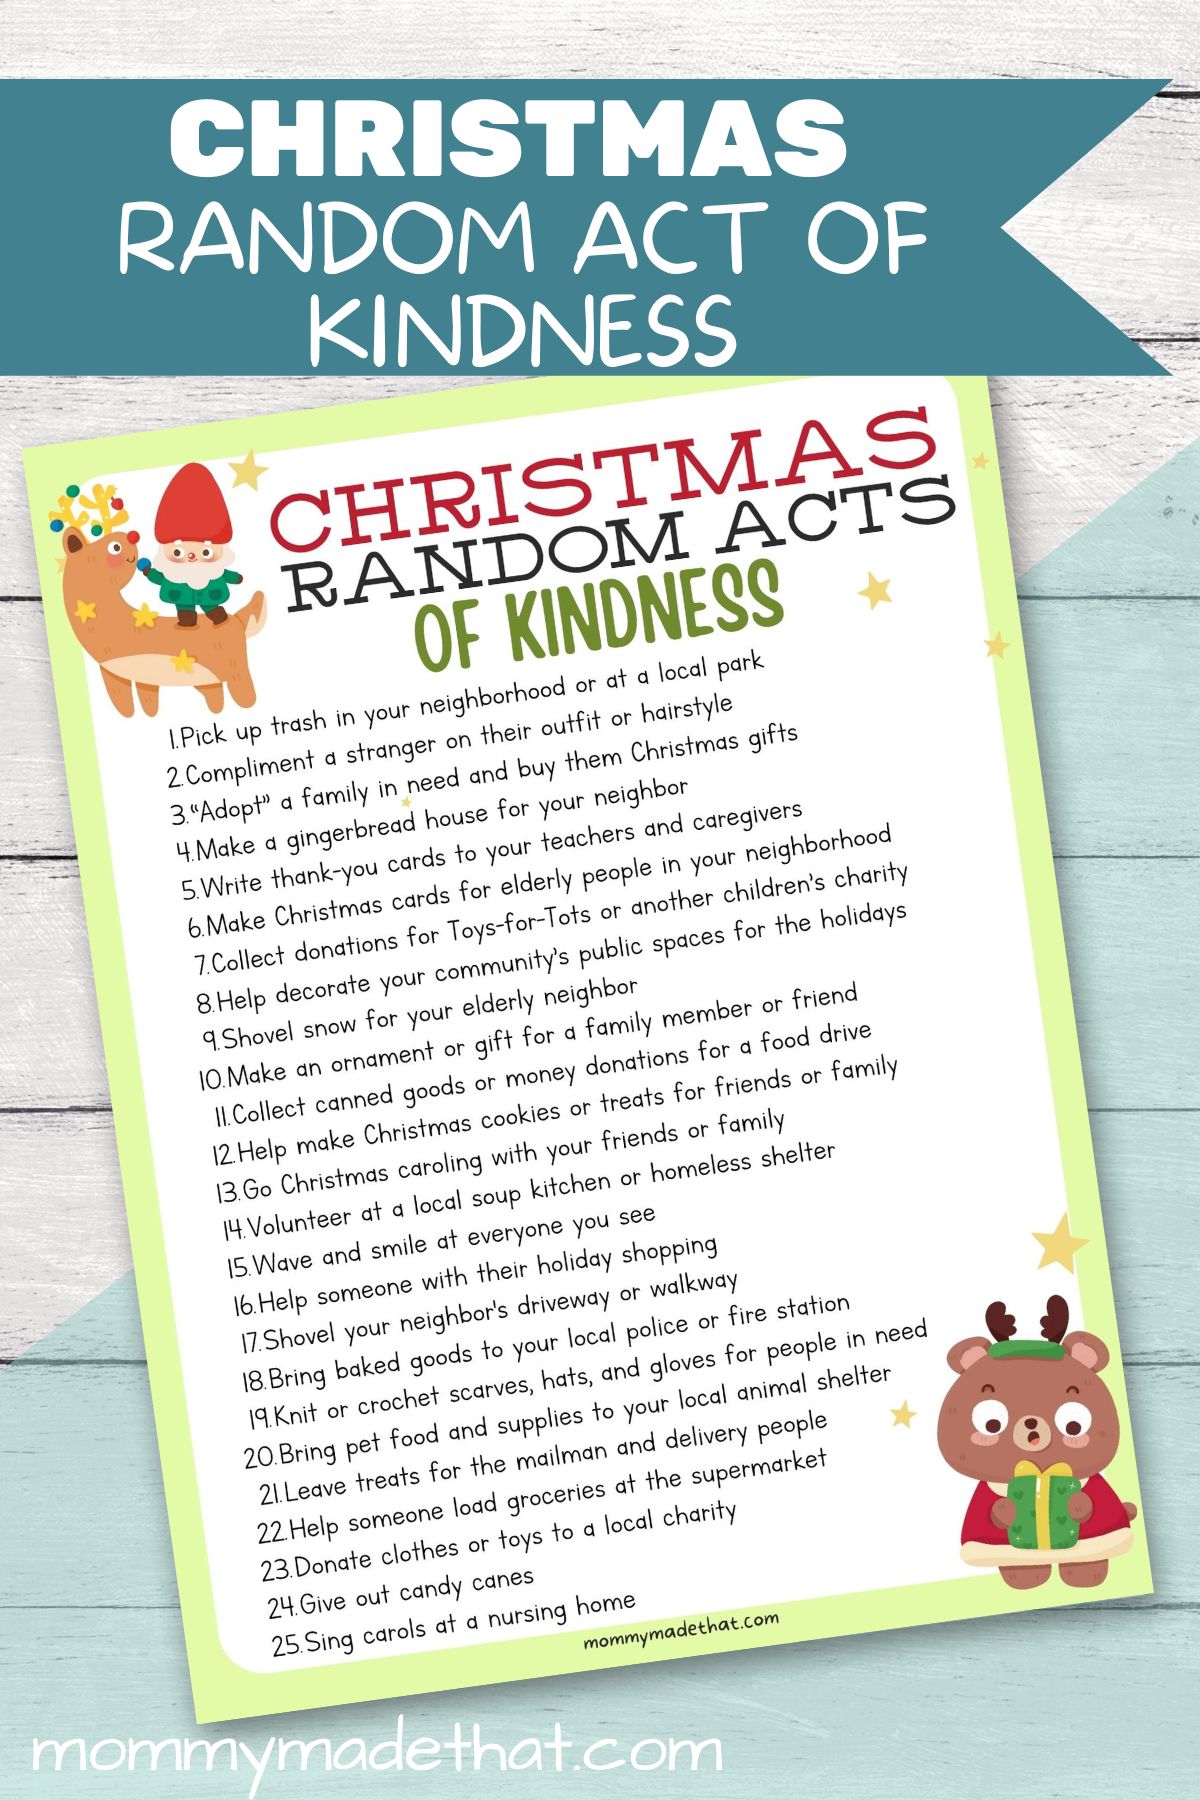 25 Random Acts of Kindness for Christmas (+Free Printable)